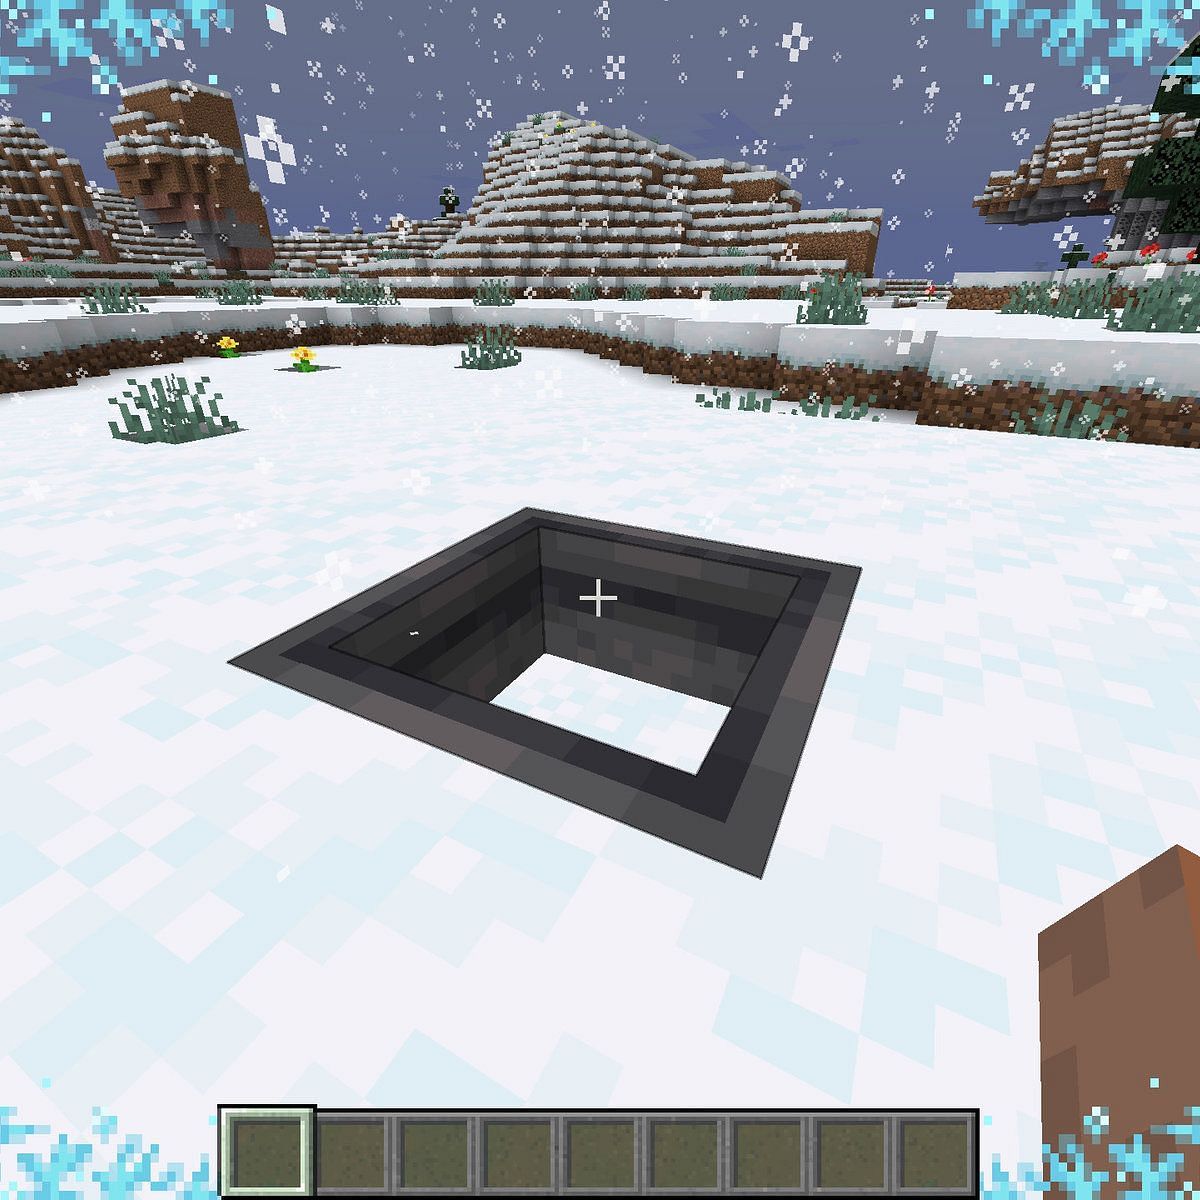 Powdered snow in a cauldron (Image via Minecraft)